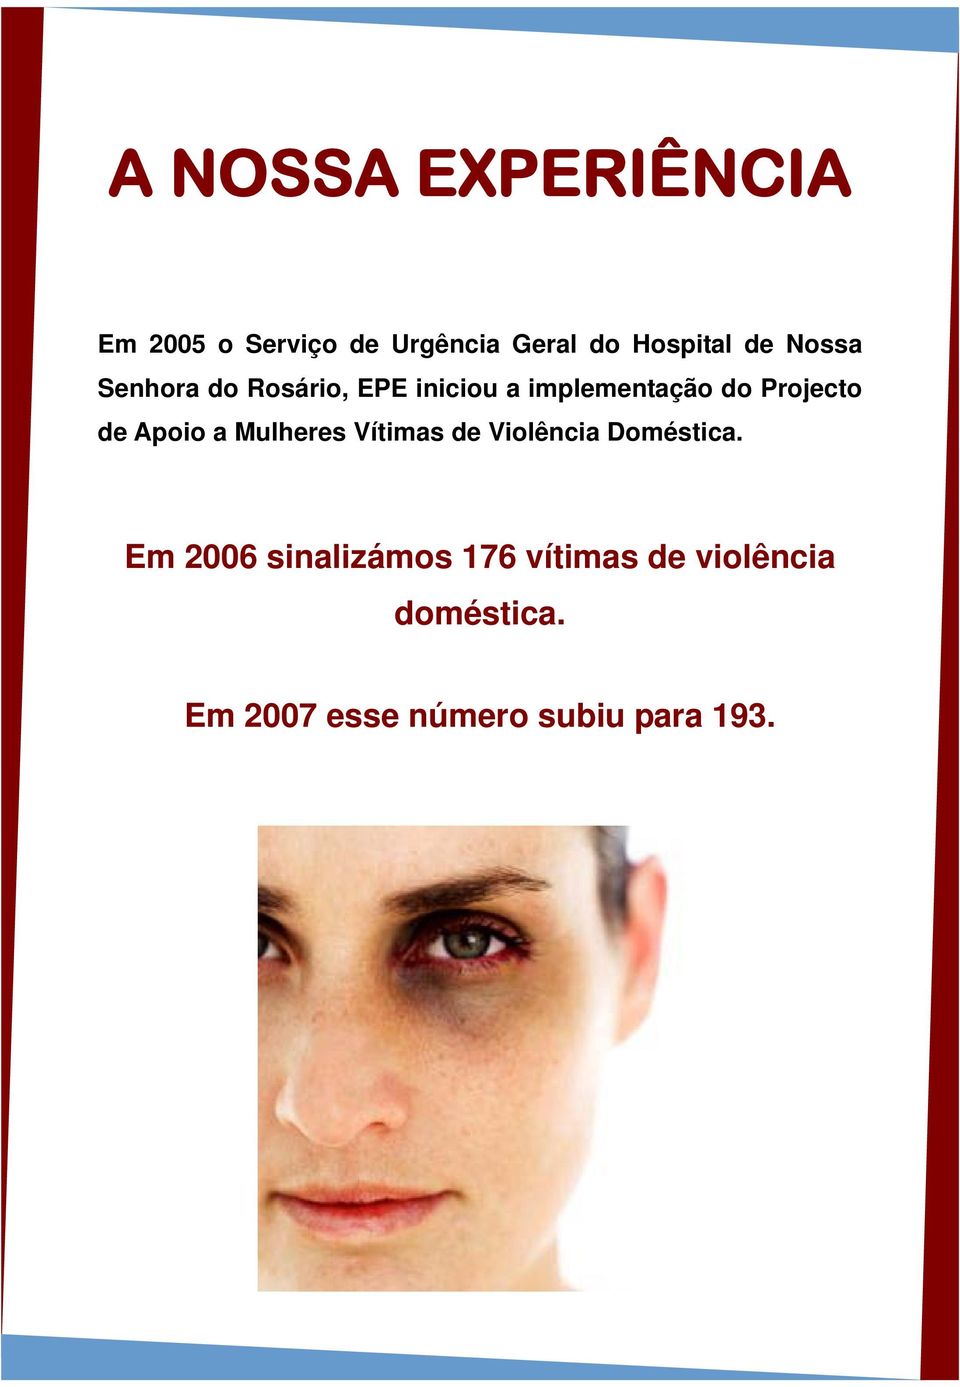 de Apoio a Mulheres Vítimas de Violência Doméstica.